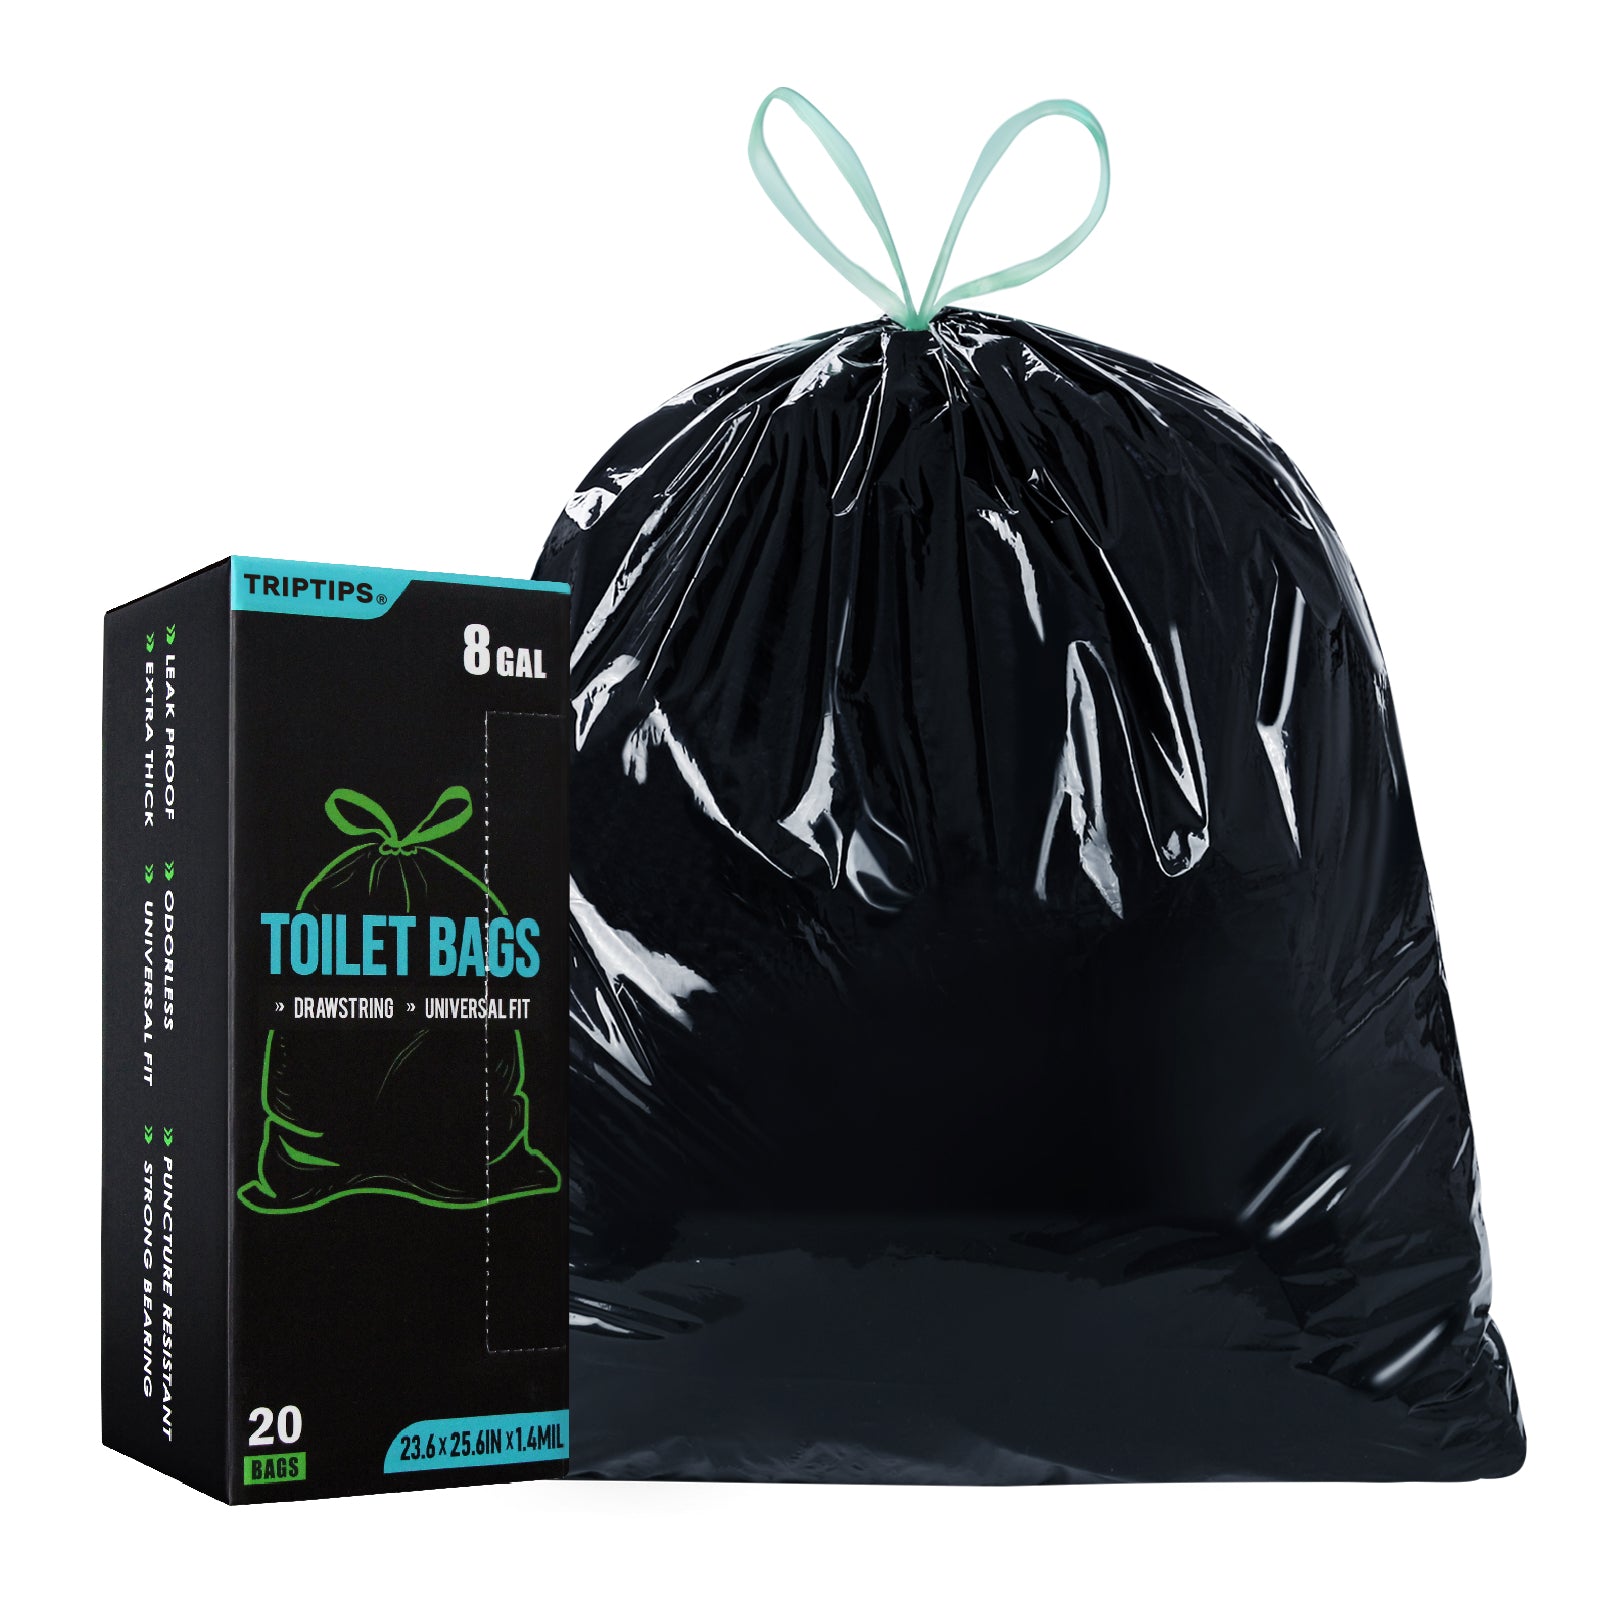 TRIPTIPS Portable Toilet Bags 20 Count Drawstring 8 Gallon Camping Toi